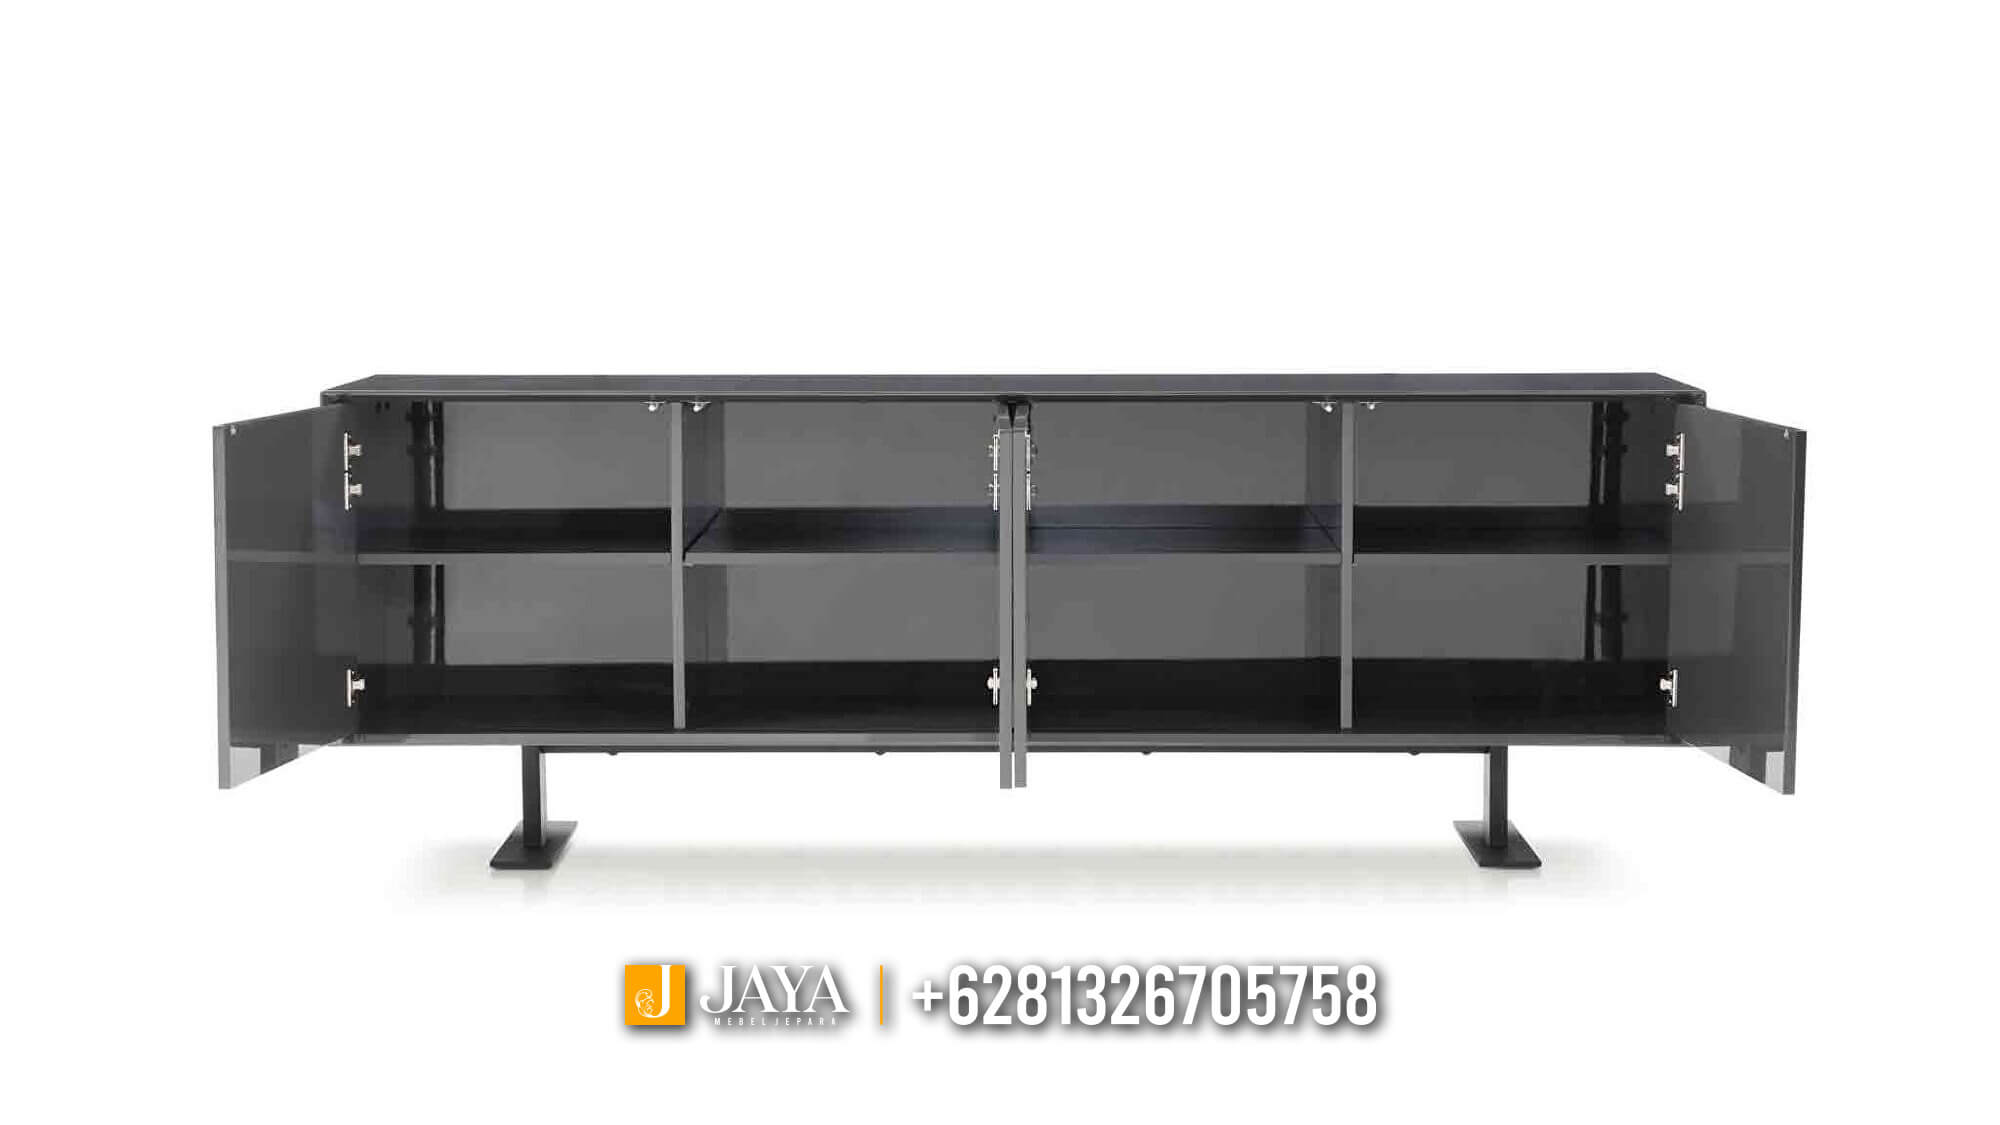 Harga Bufet Minimalis Terbaru Industrial Style Luxury JM842.2